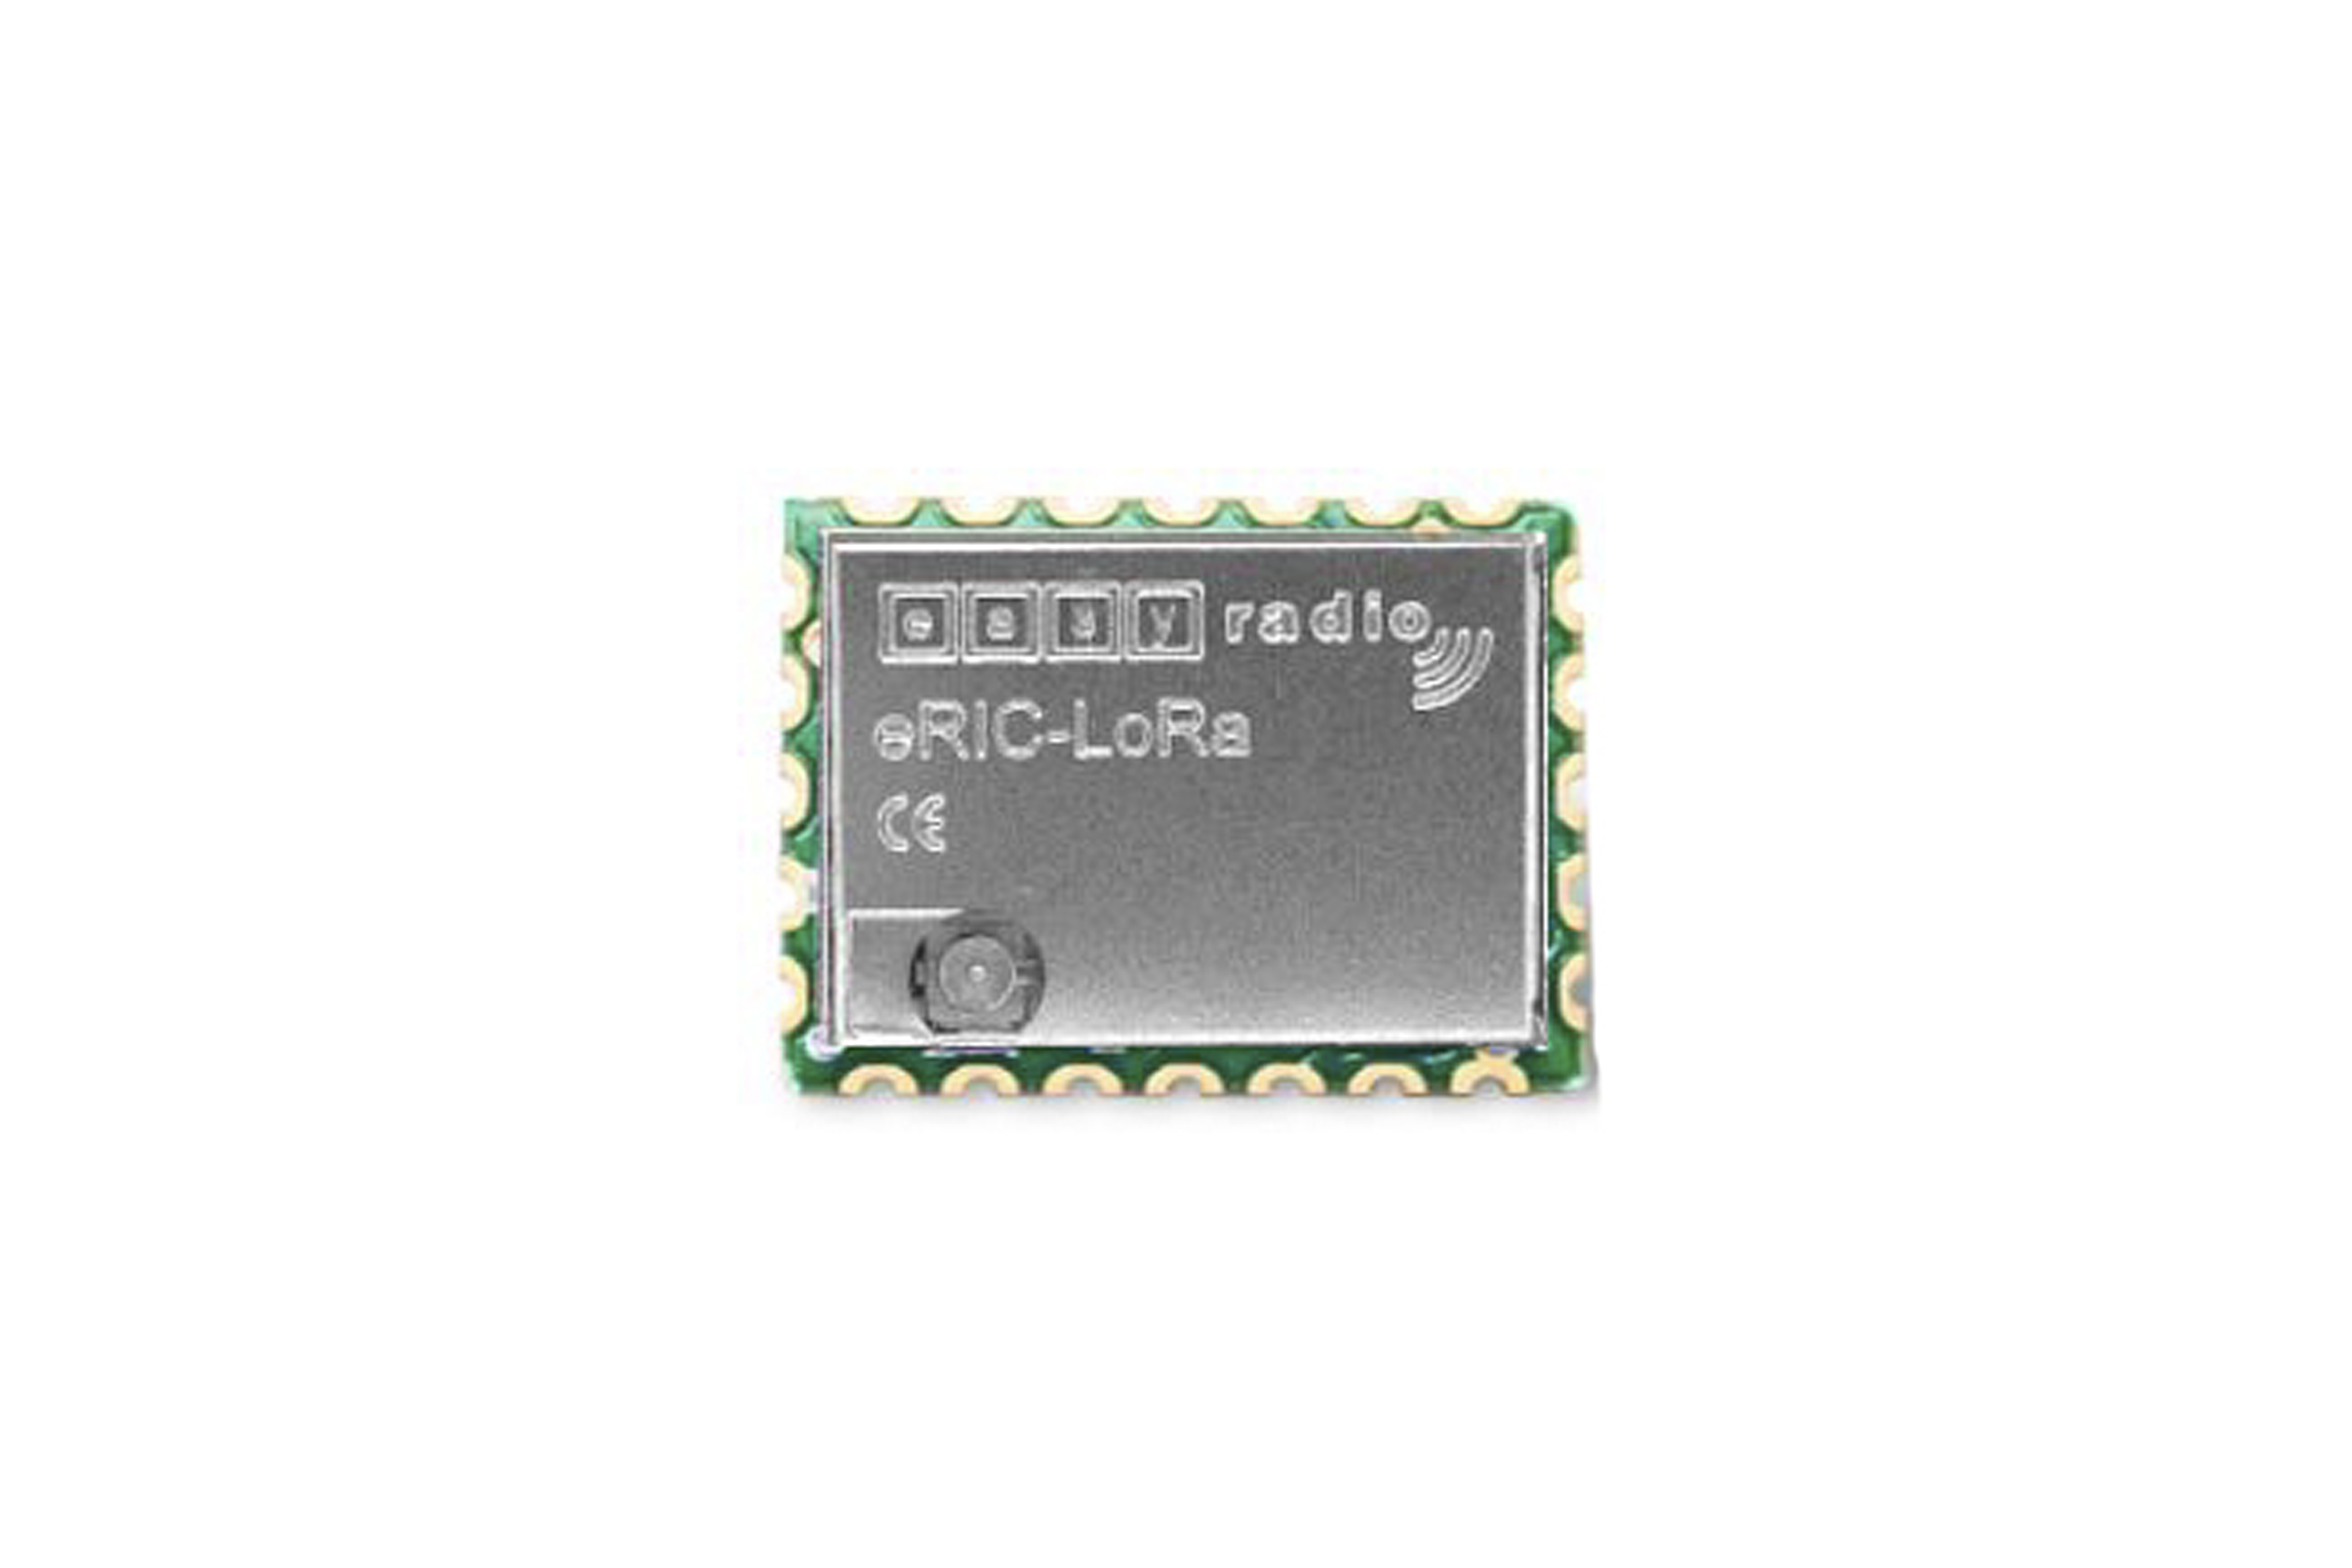 Eric-LoRa LoRa Transceiver Module 868Mhz